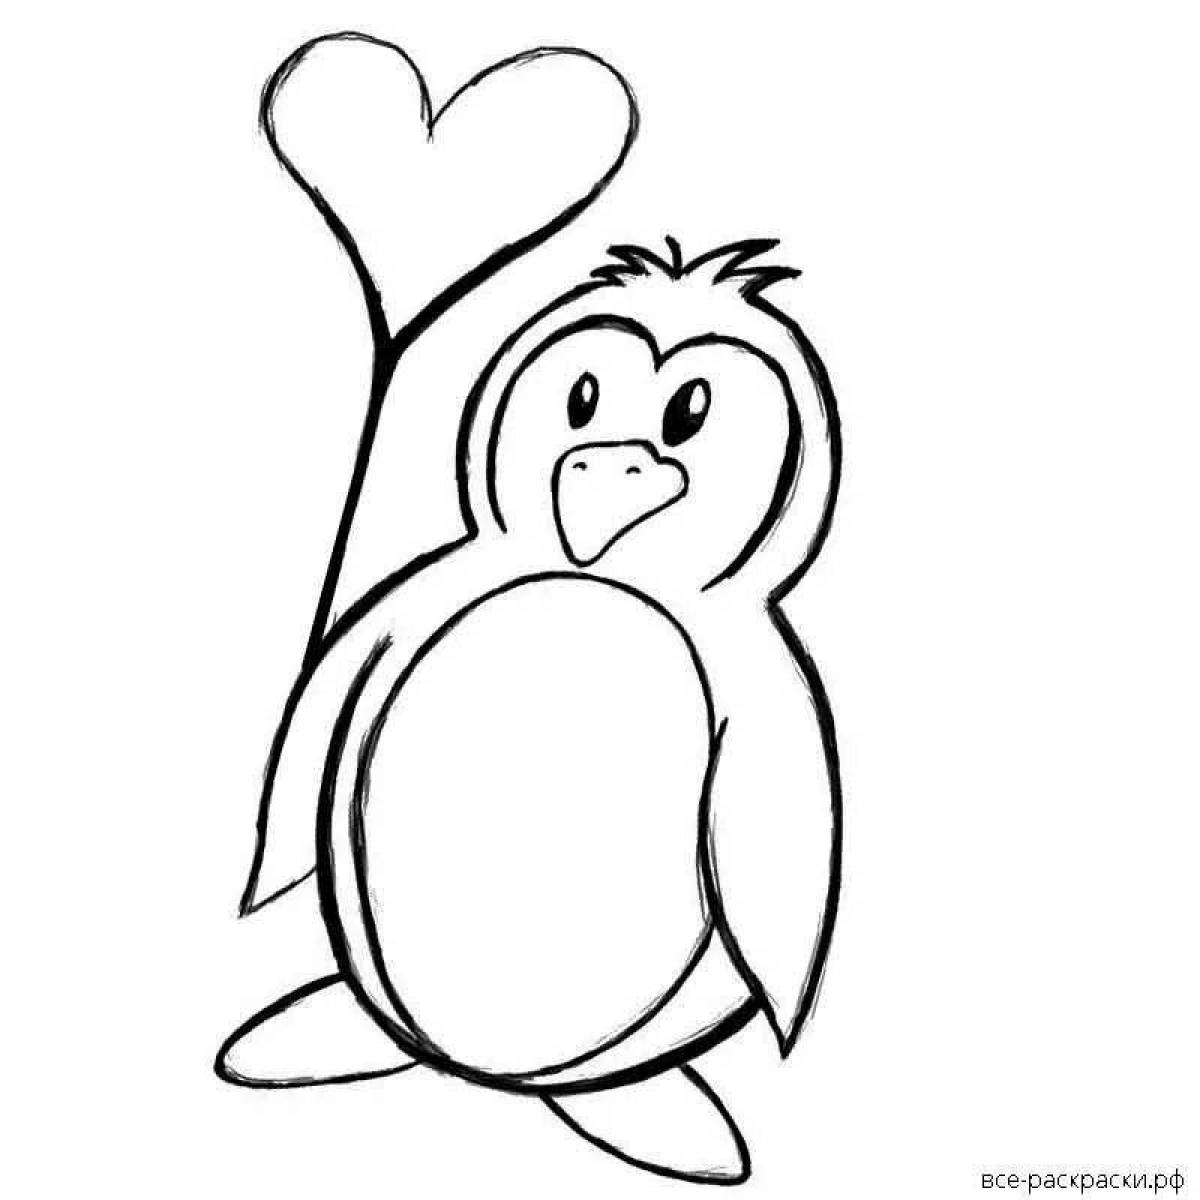 Cute penguin coloring book